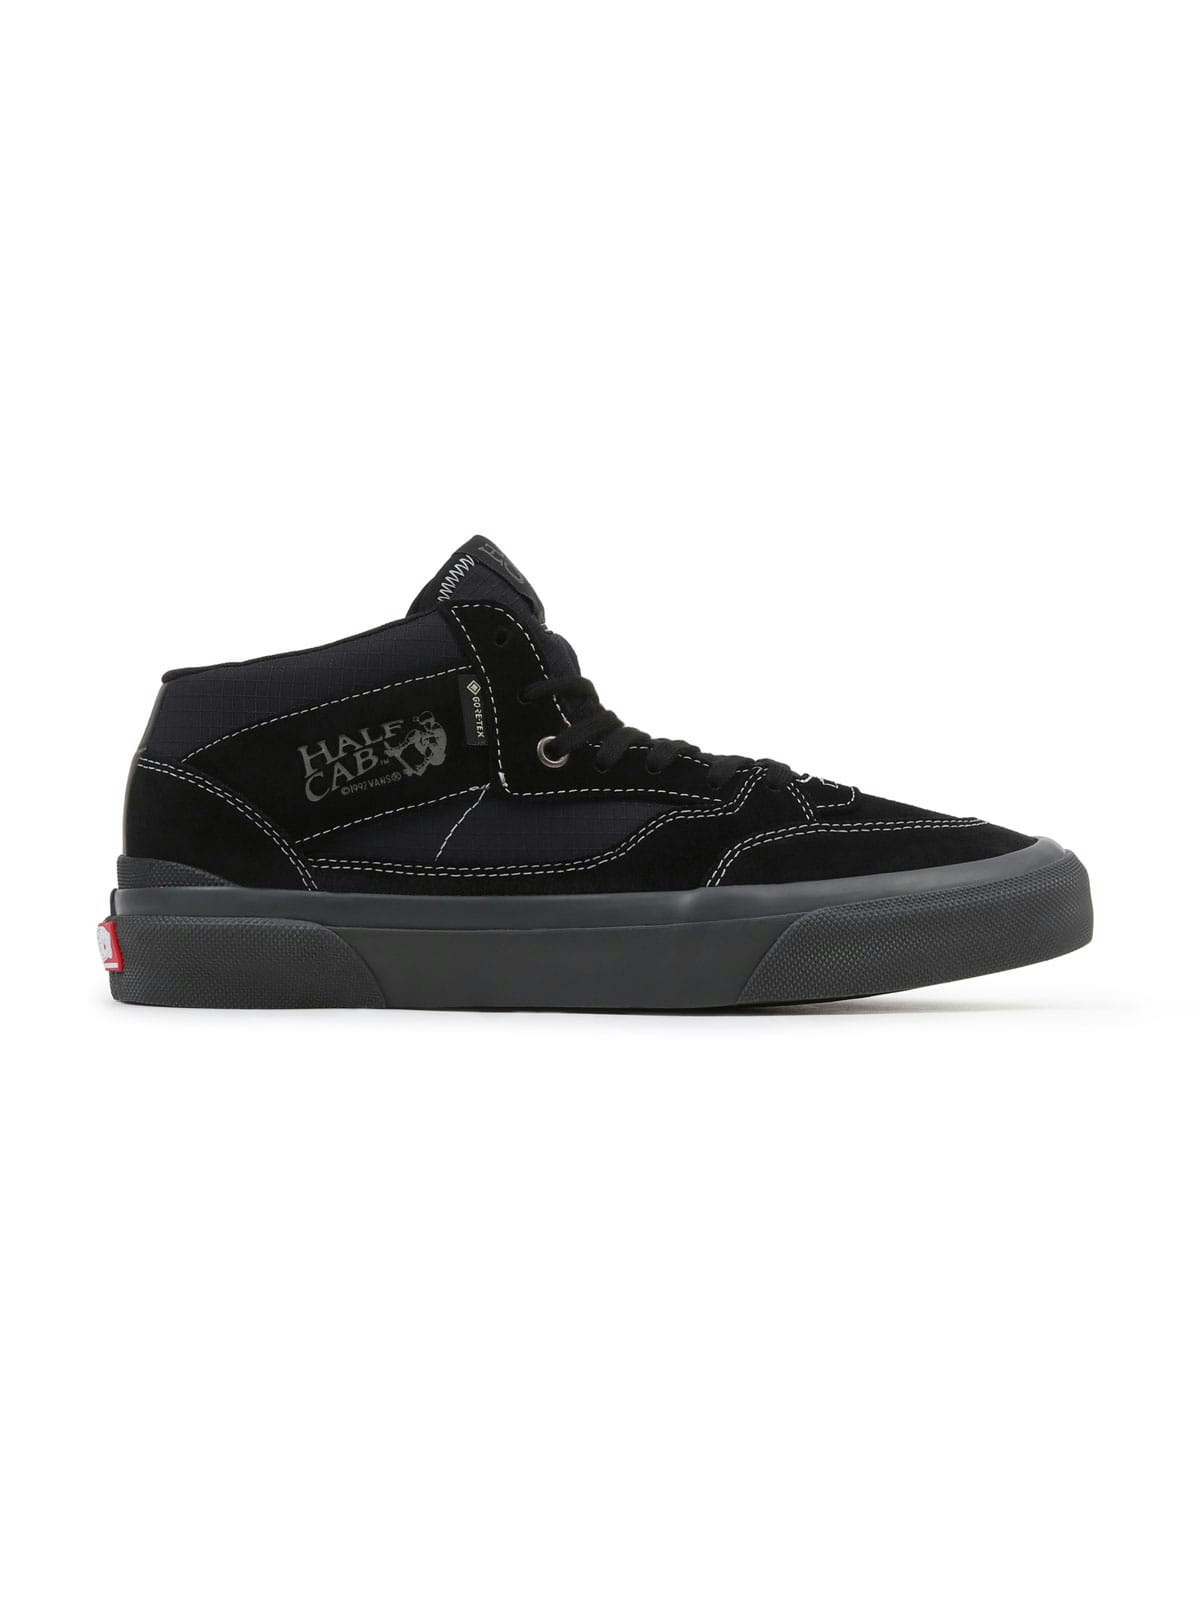 Vans Skate Half Cab '92 GORE-TEX Shoes Black 2